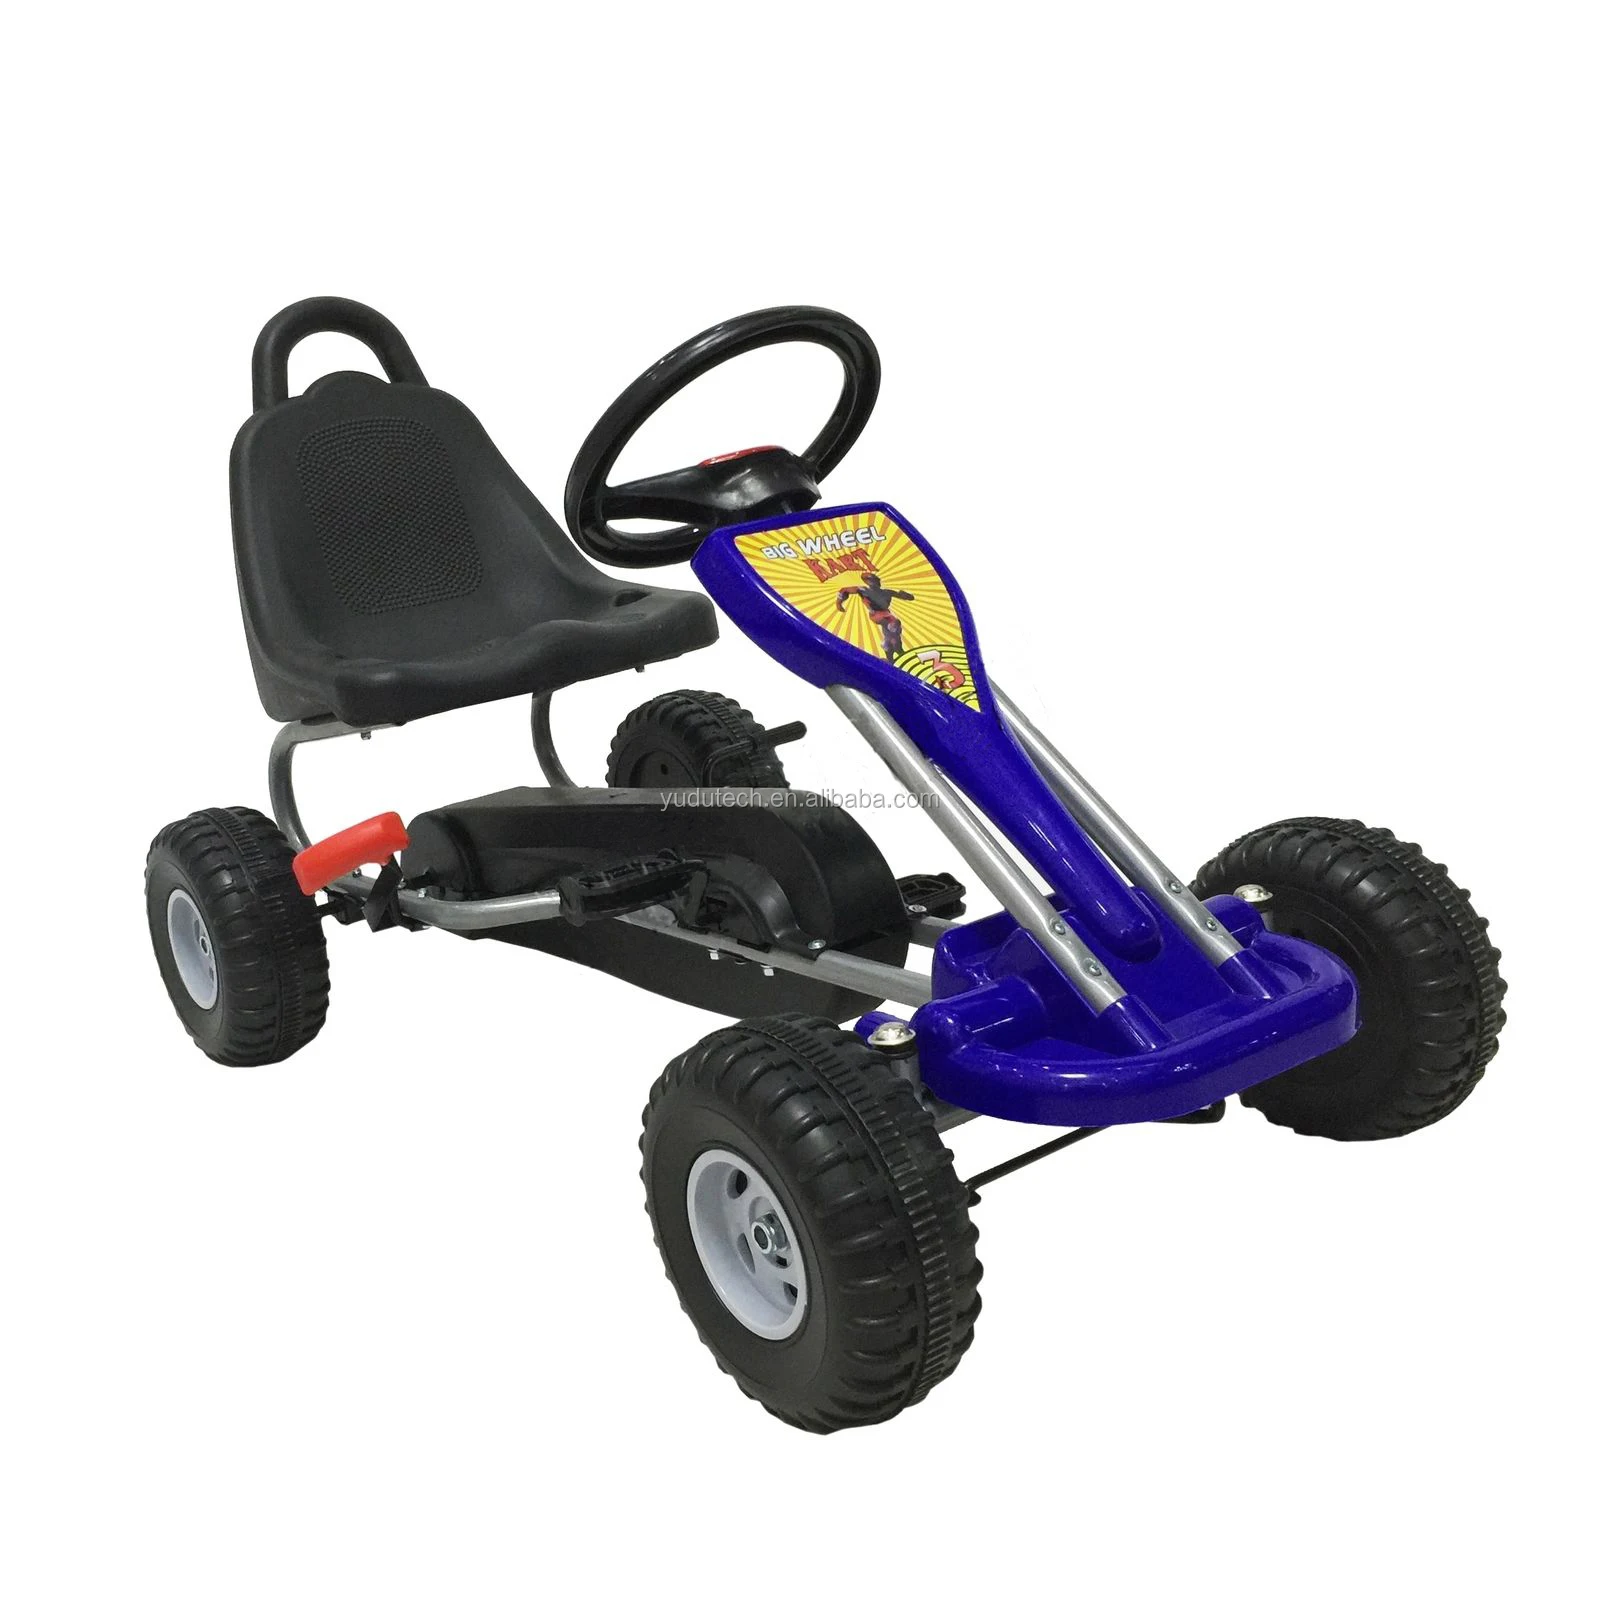 FoxHunter Kids Children Outdoor Go Kart Ride On Car With Pedal Rubber Wheels Handbrake Adjustable Seat G02 Blue 